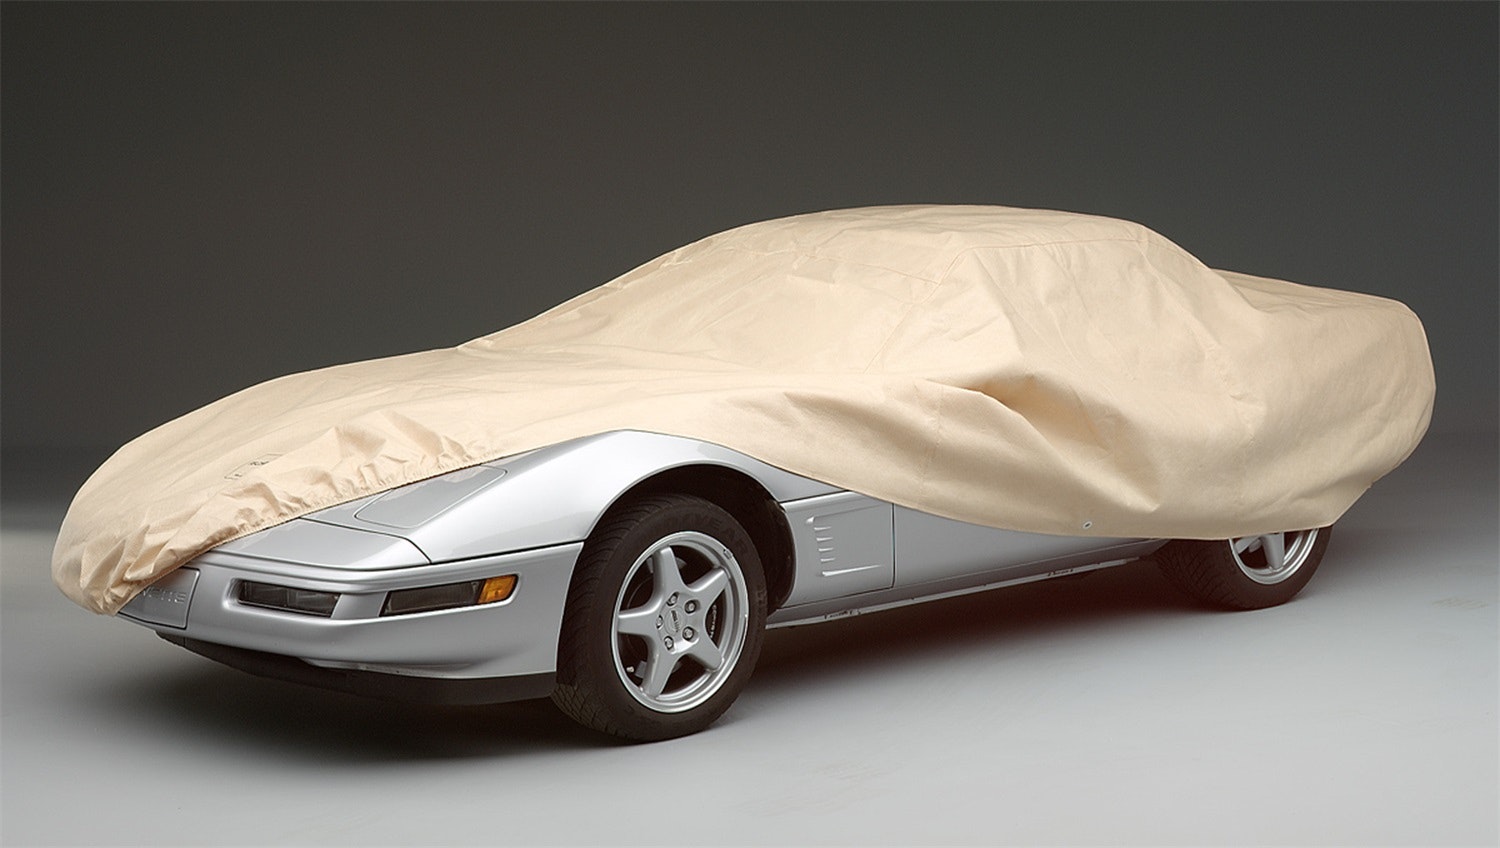 Technalon Evolution Fabric, Tan Covercraft Custom Fit Car Cover for Chrysler Crossfire